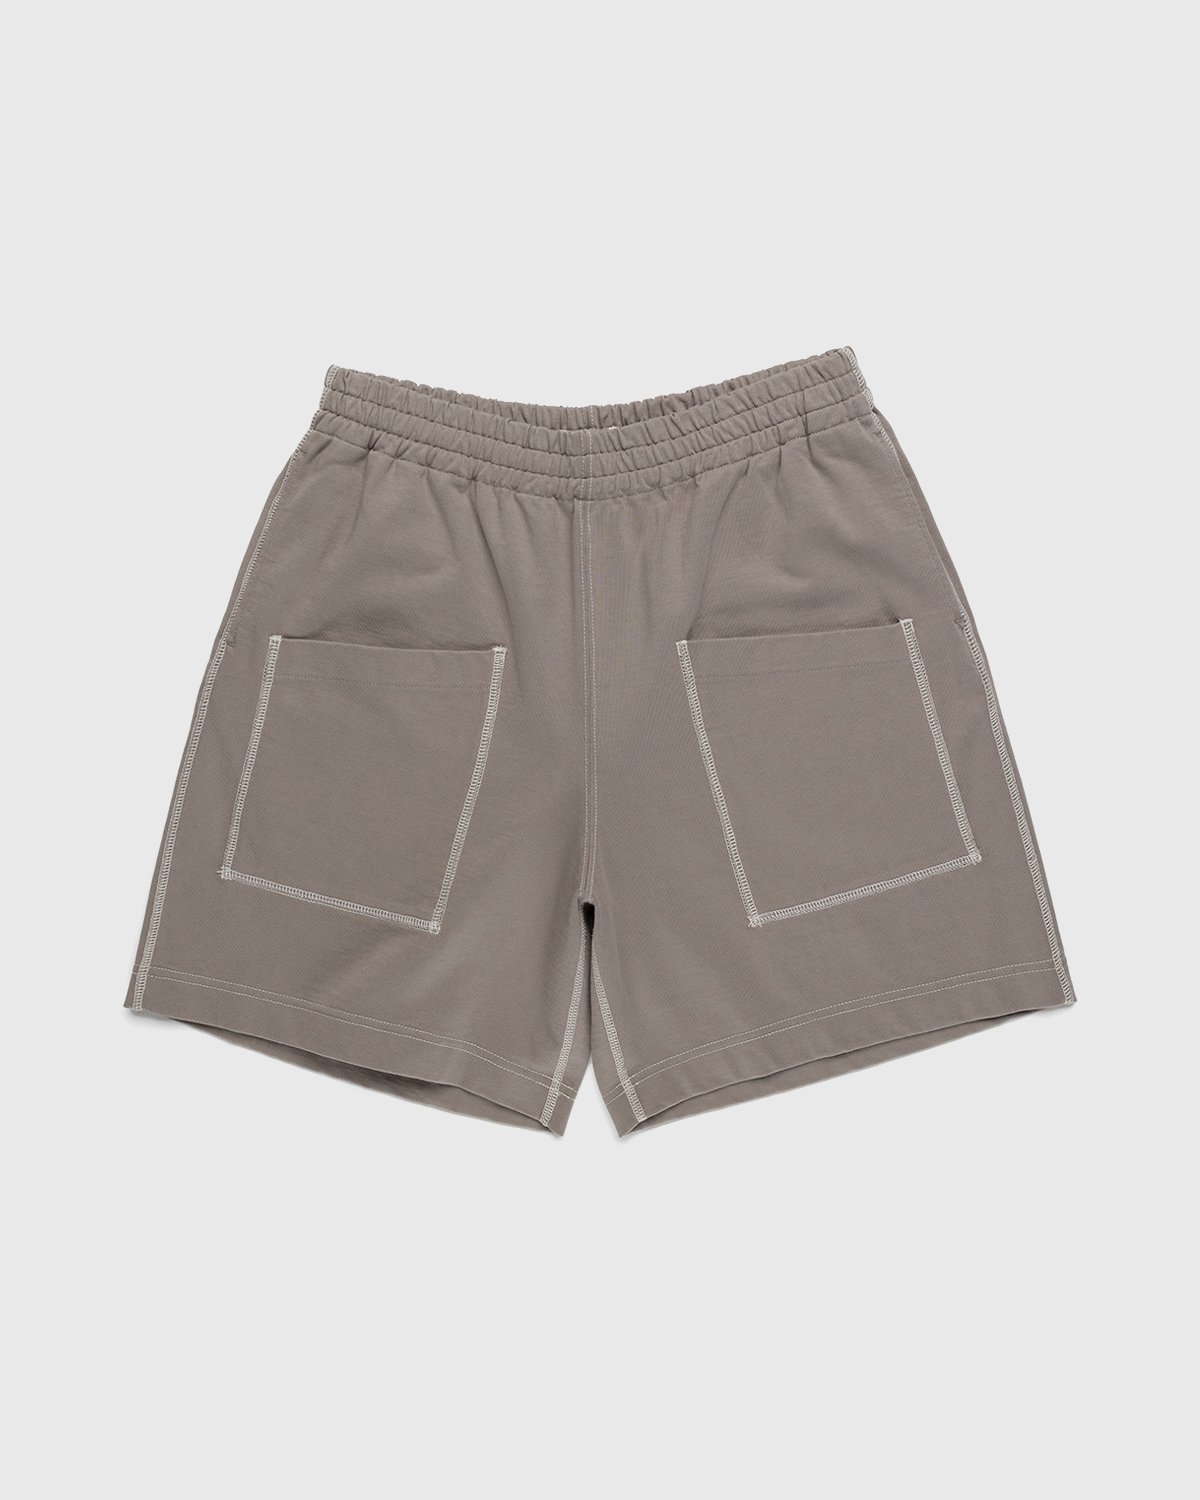 Auralee - High Density Cotton Jersey Shorts Grey Beige - Clothing - Beige - Image 1